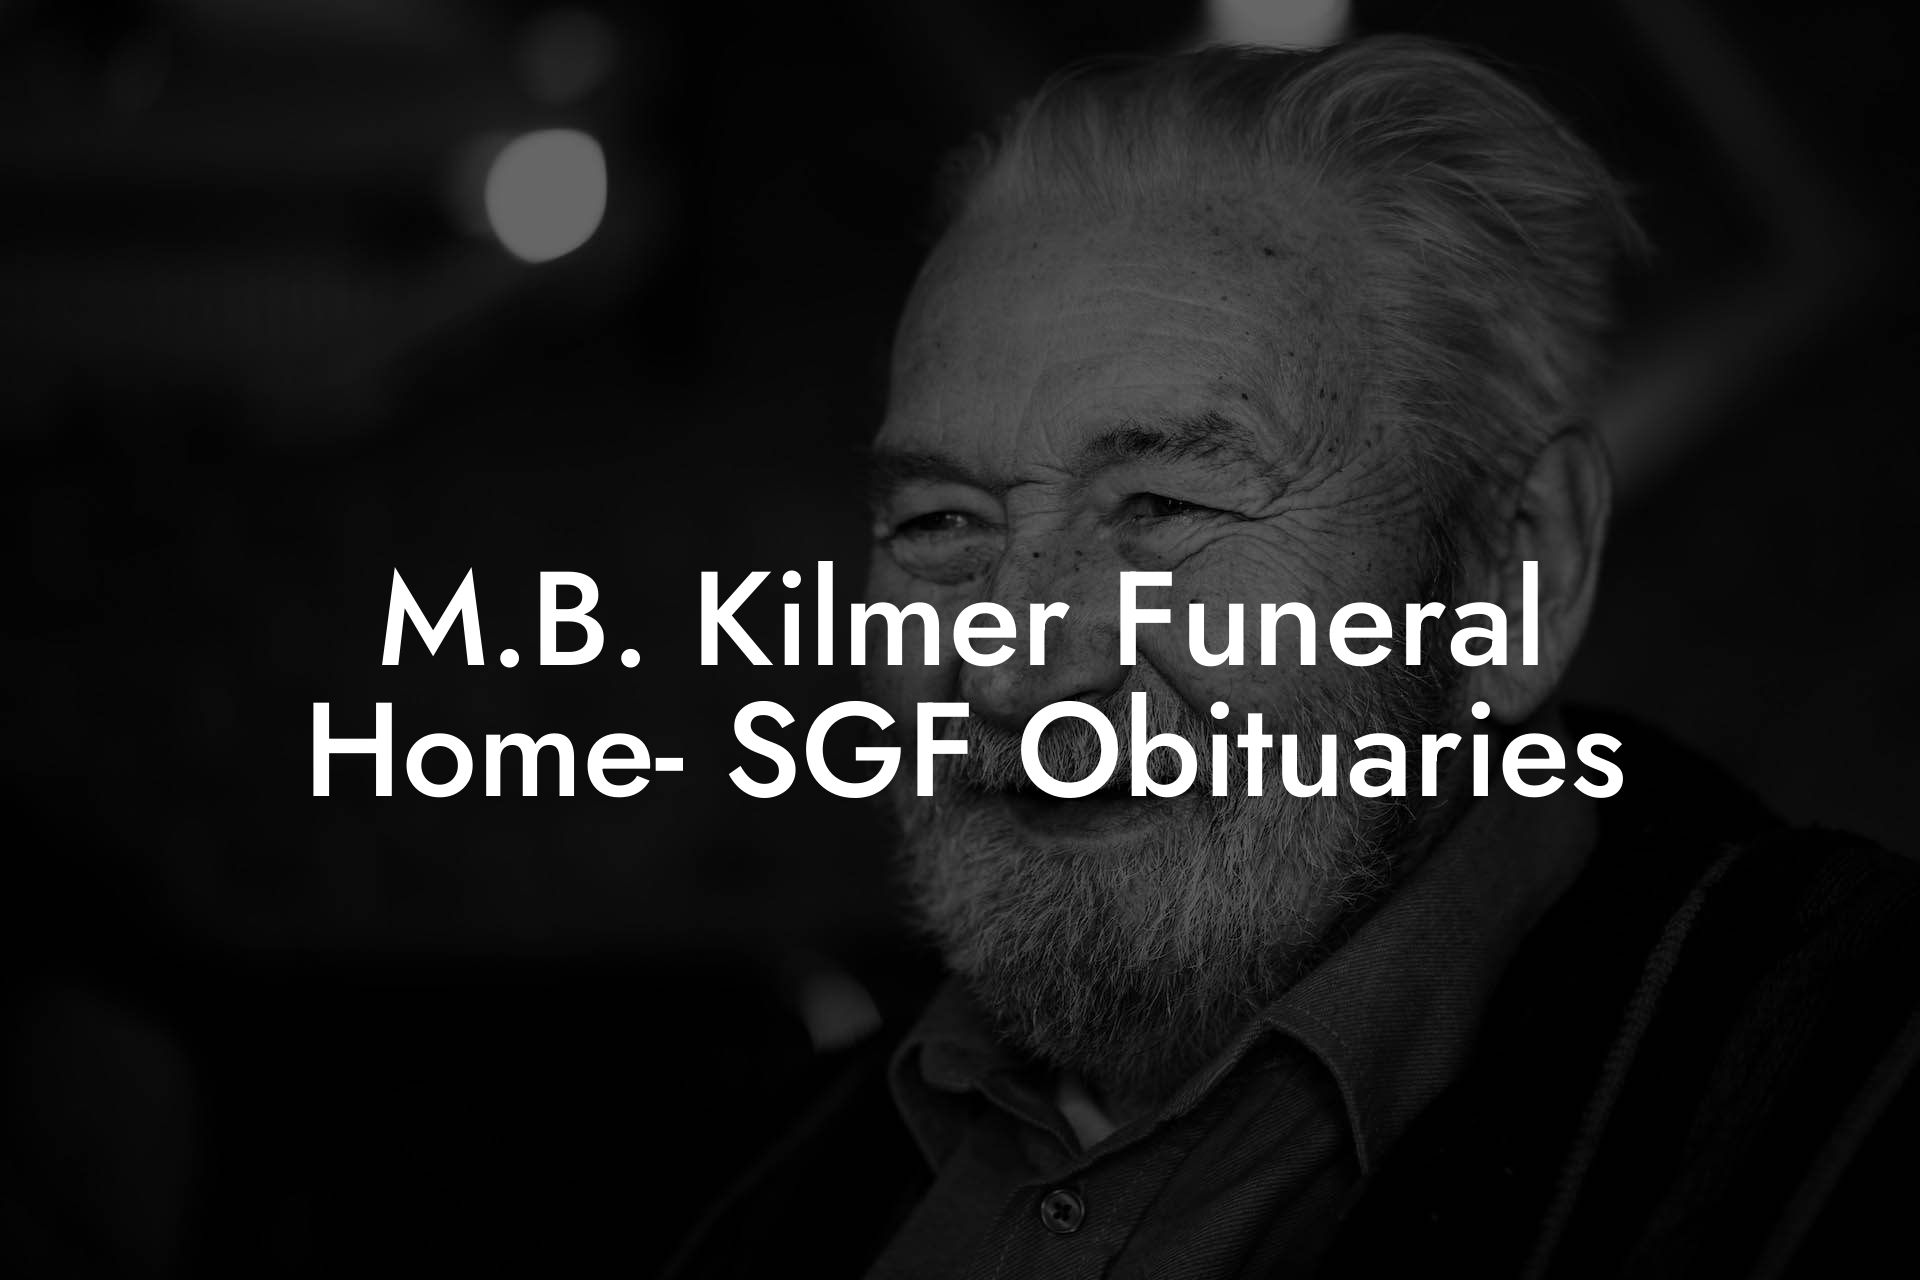 M.B. Kilmer Funeral Home- SGF Obituaries